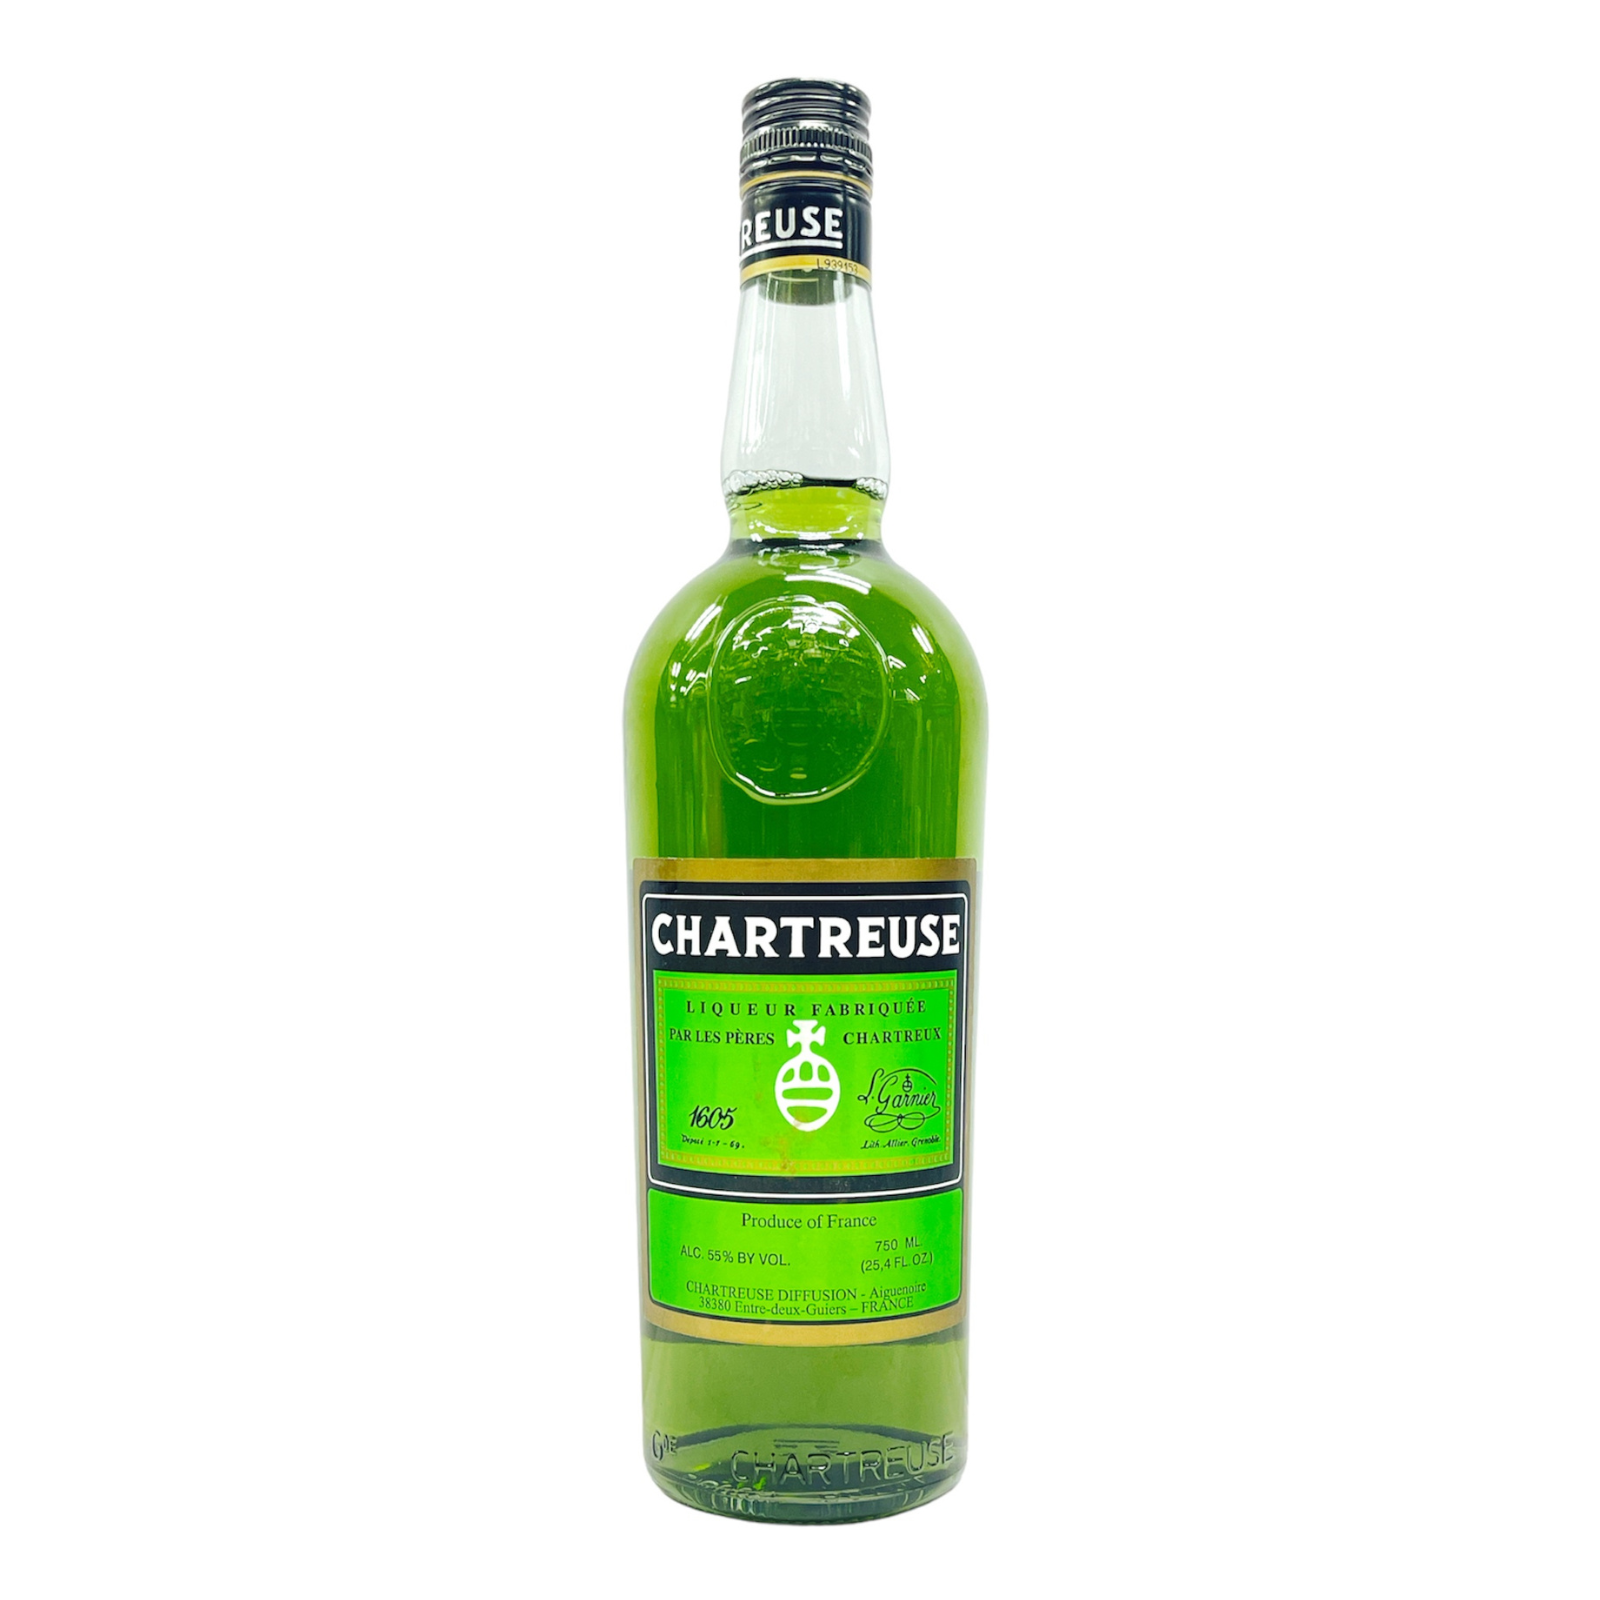 Chartreuse Liqueur Fabriquee Green Bottle Edition (110 Proof)